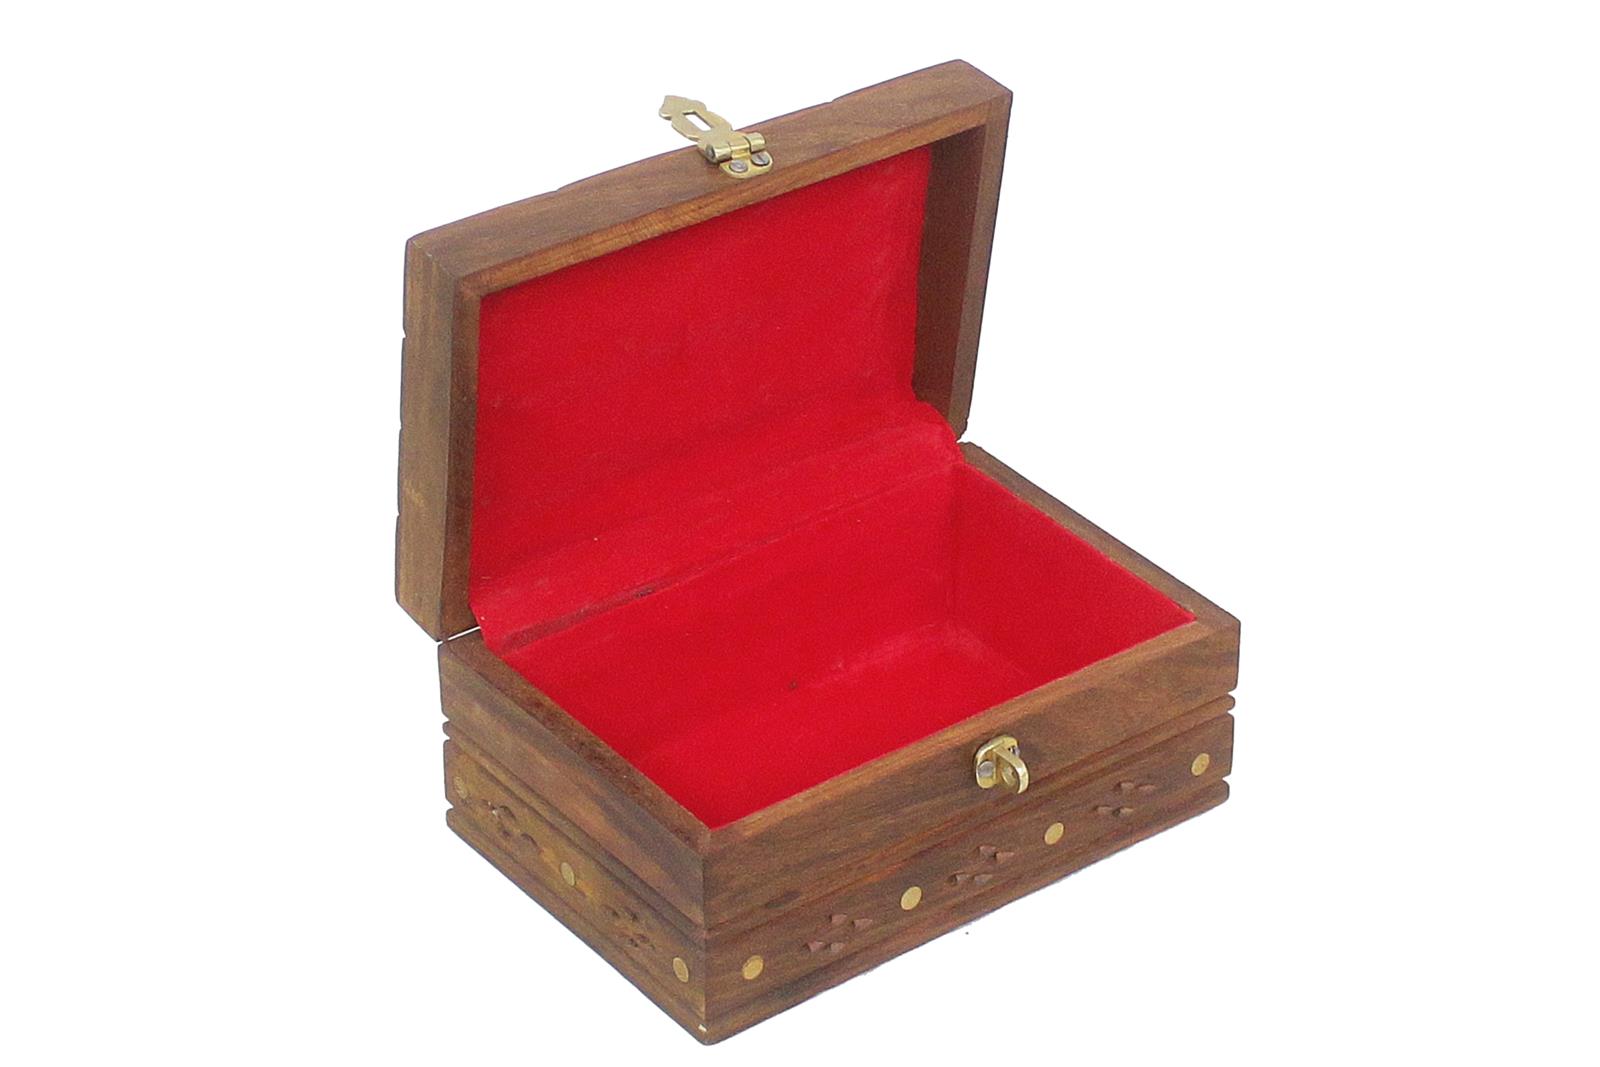 handmade Traditional Jewelrybox Brown Gold Hand-made RECTANGLE WOOD Jewelry Box